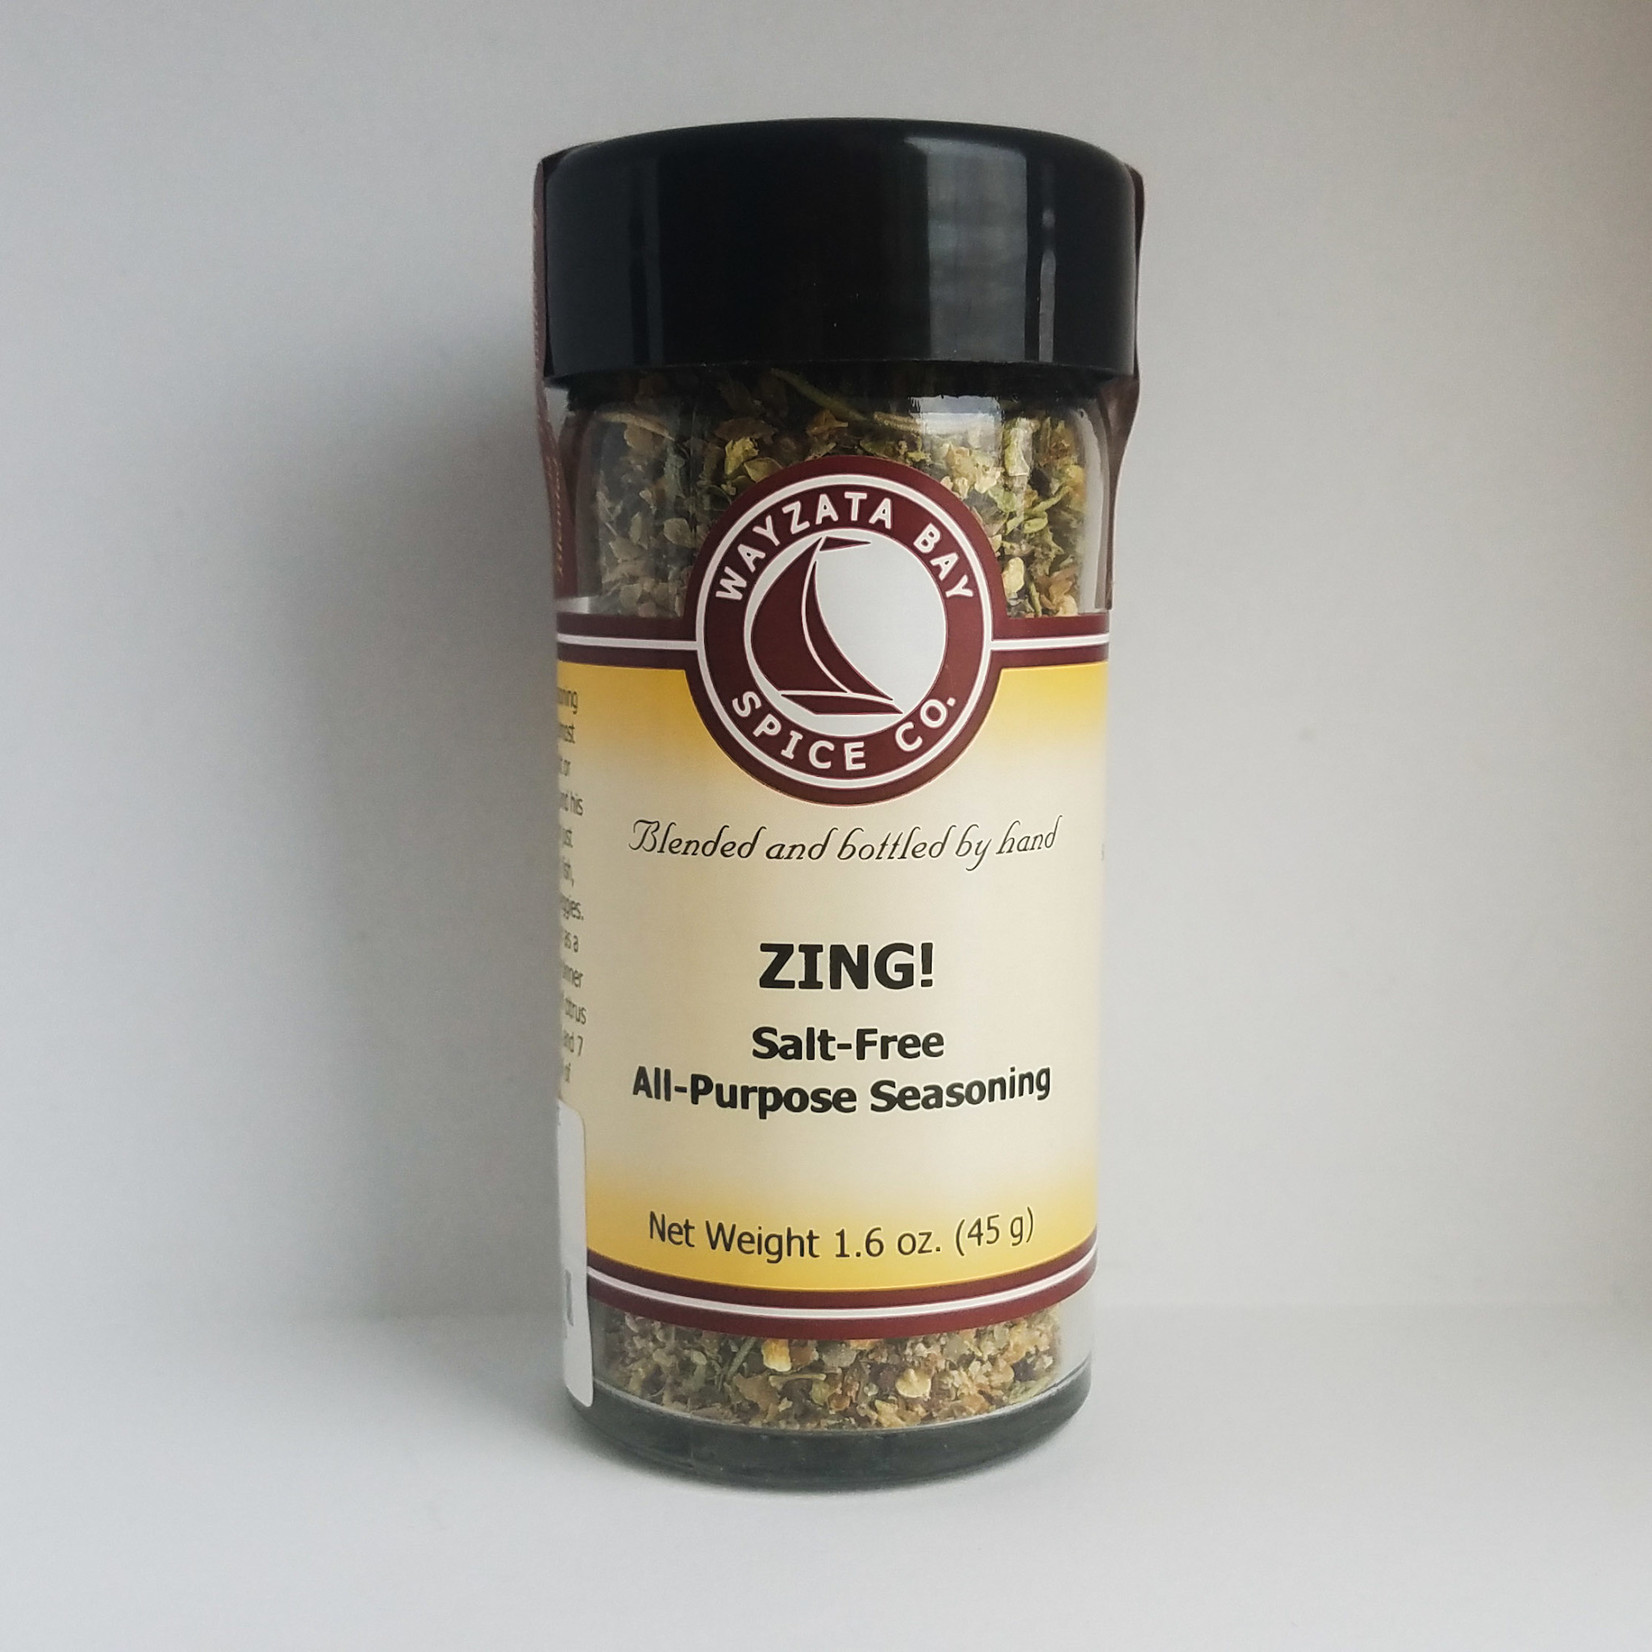 Wayzata Bay Spice Co. Zing (salt free) Seasoning